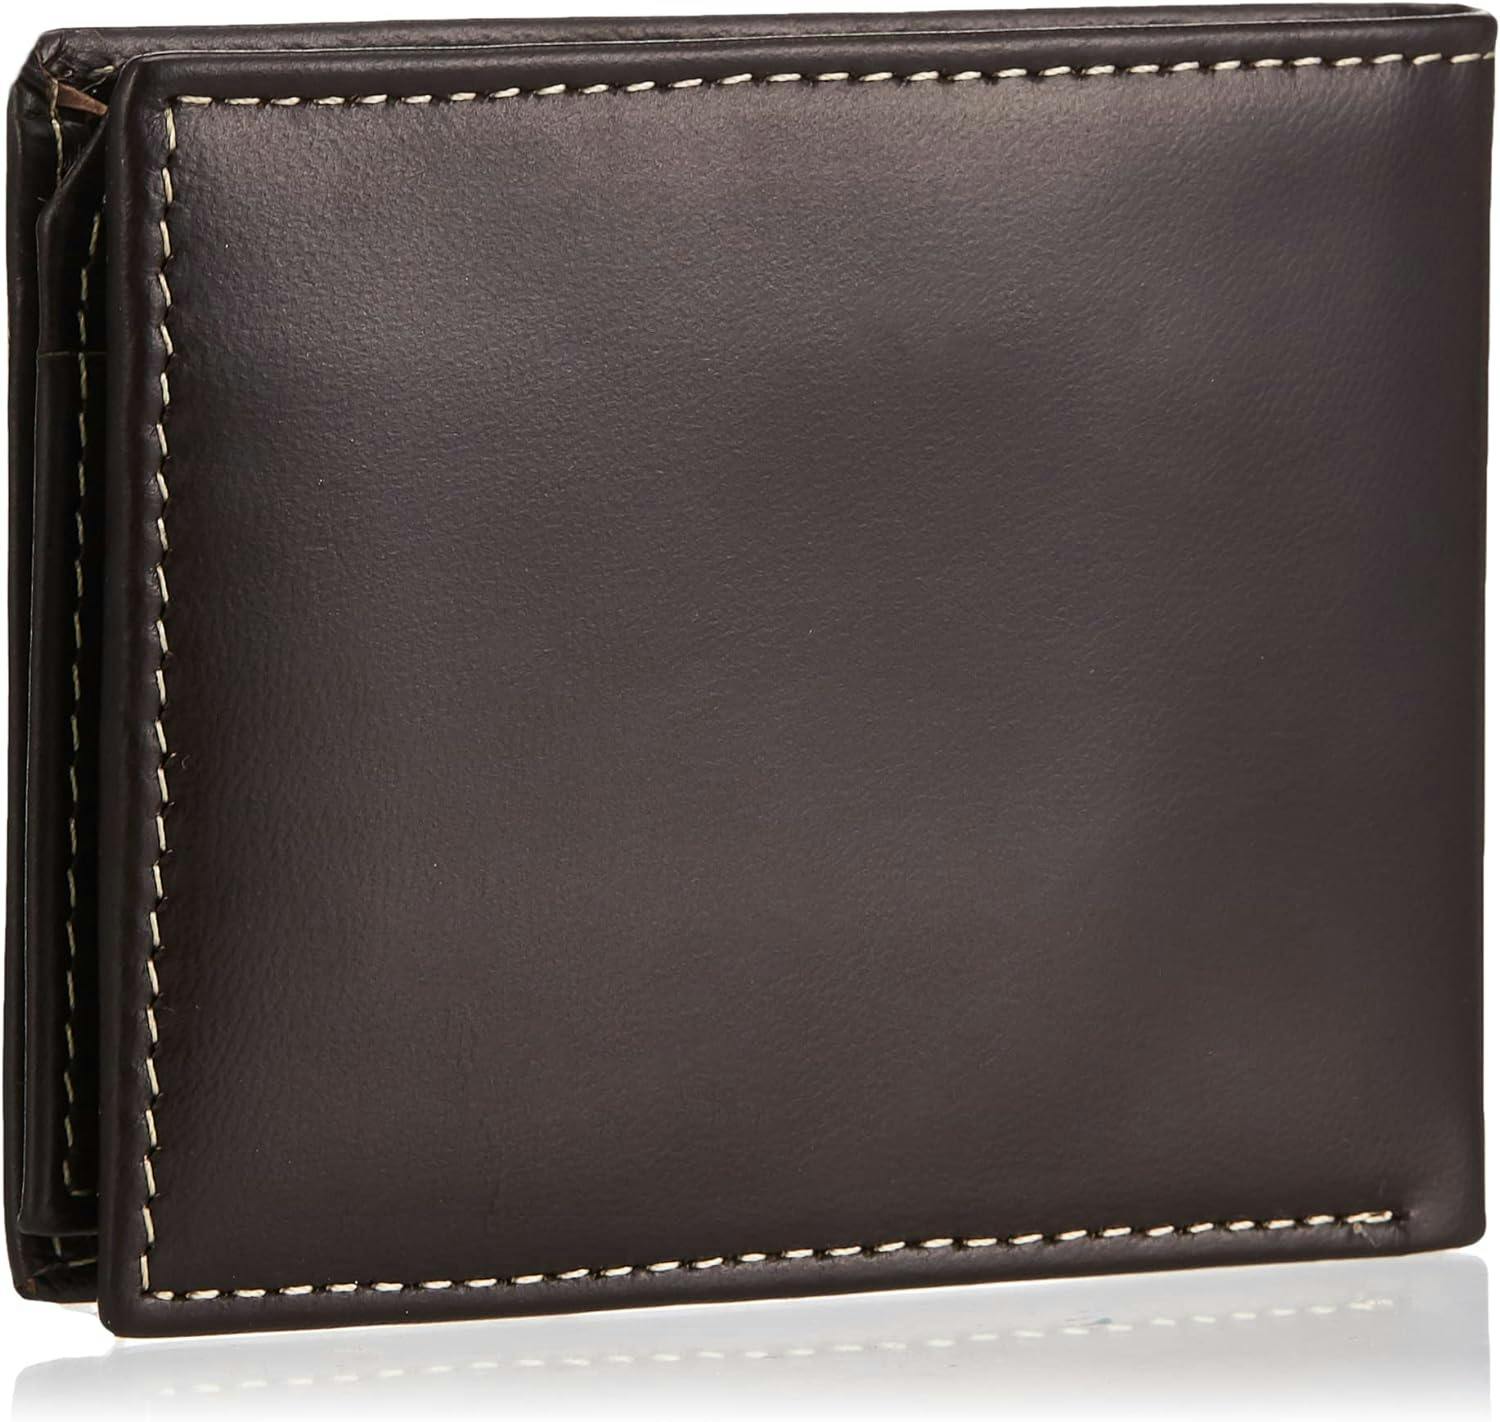 Rugged Brown Leather Slim Bifold Men's Wallet with Flip Pocket